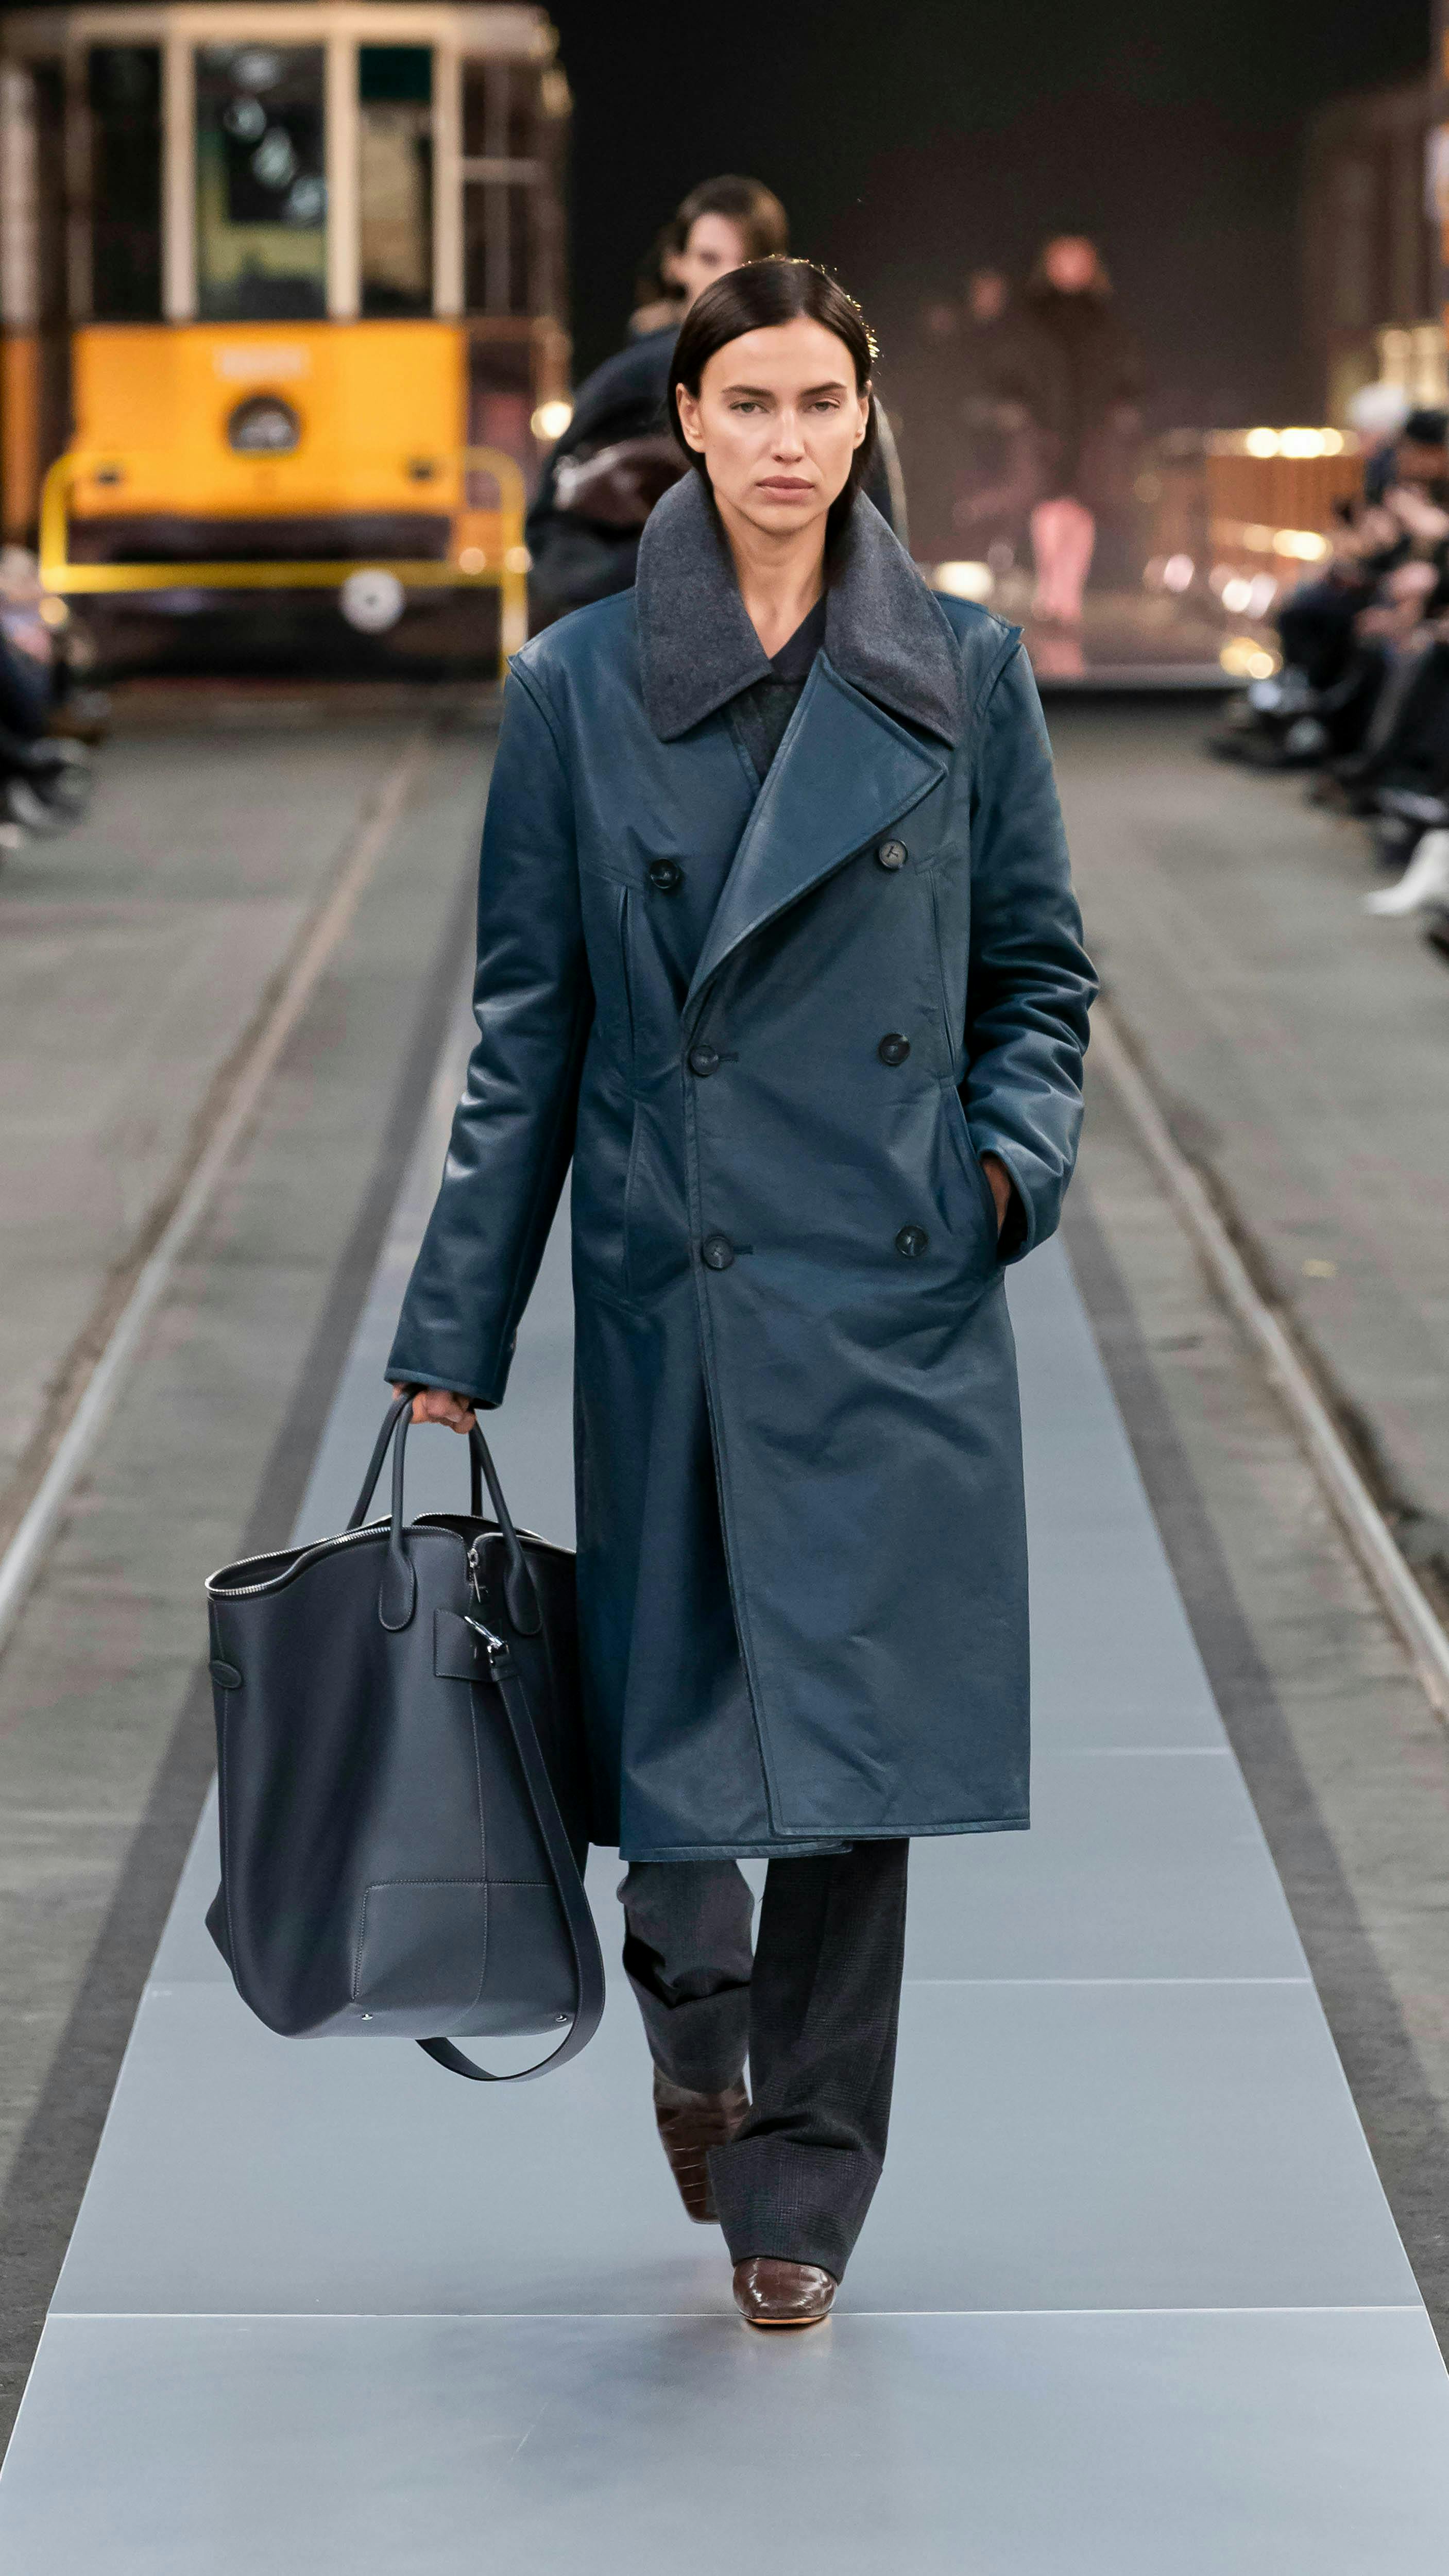 clothing coat adult female person woman overcoat accessories bag handbag